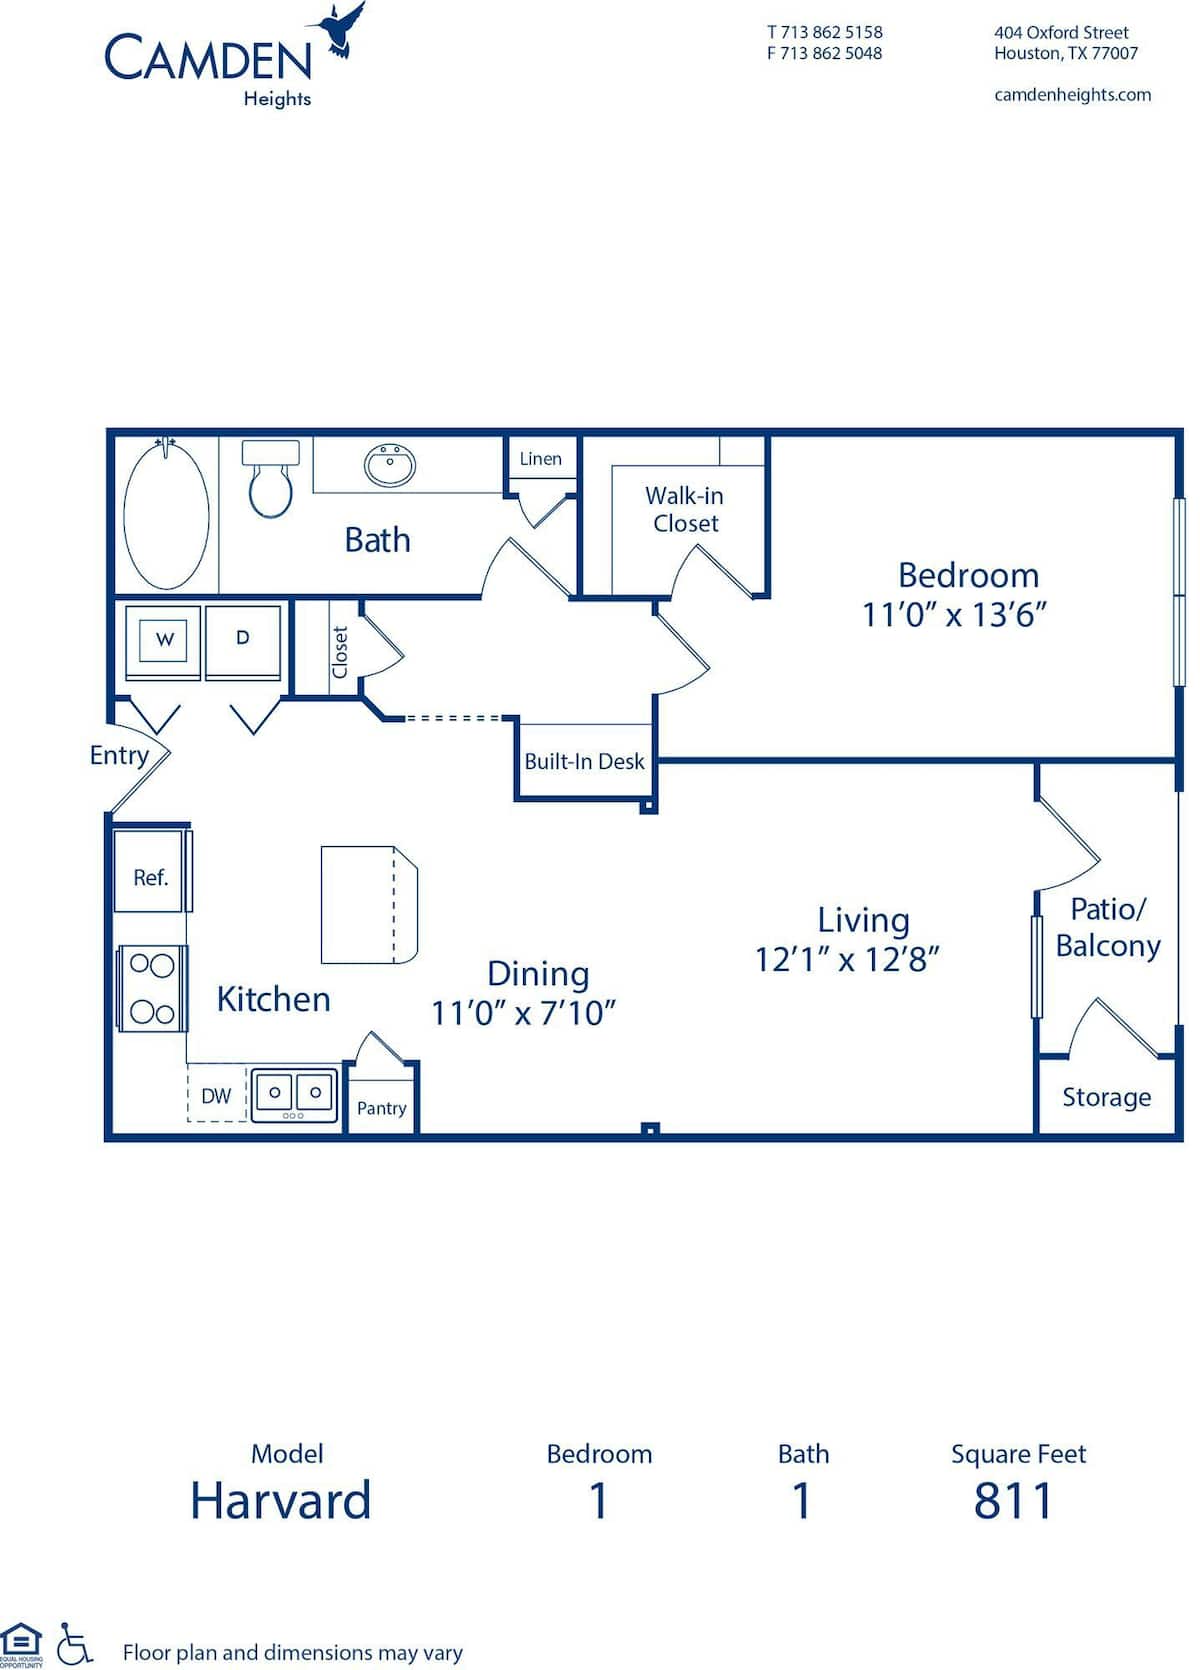 Floorplan diagram for The Harvard, showing 1 bedroom